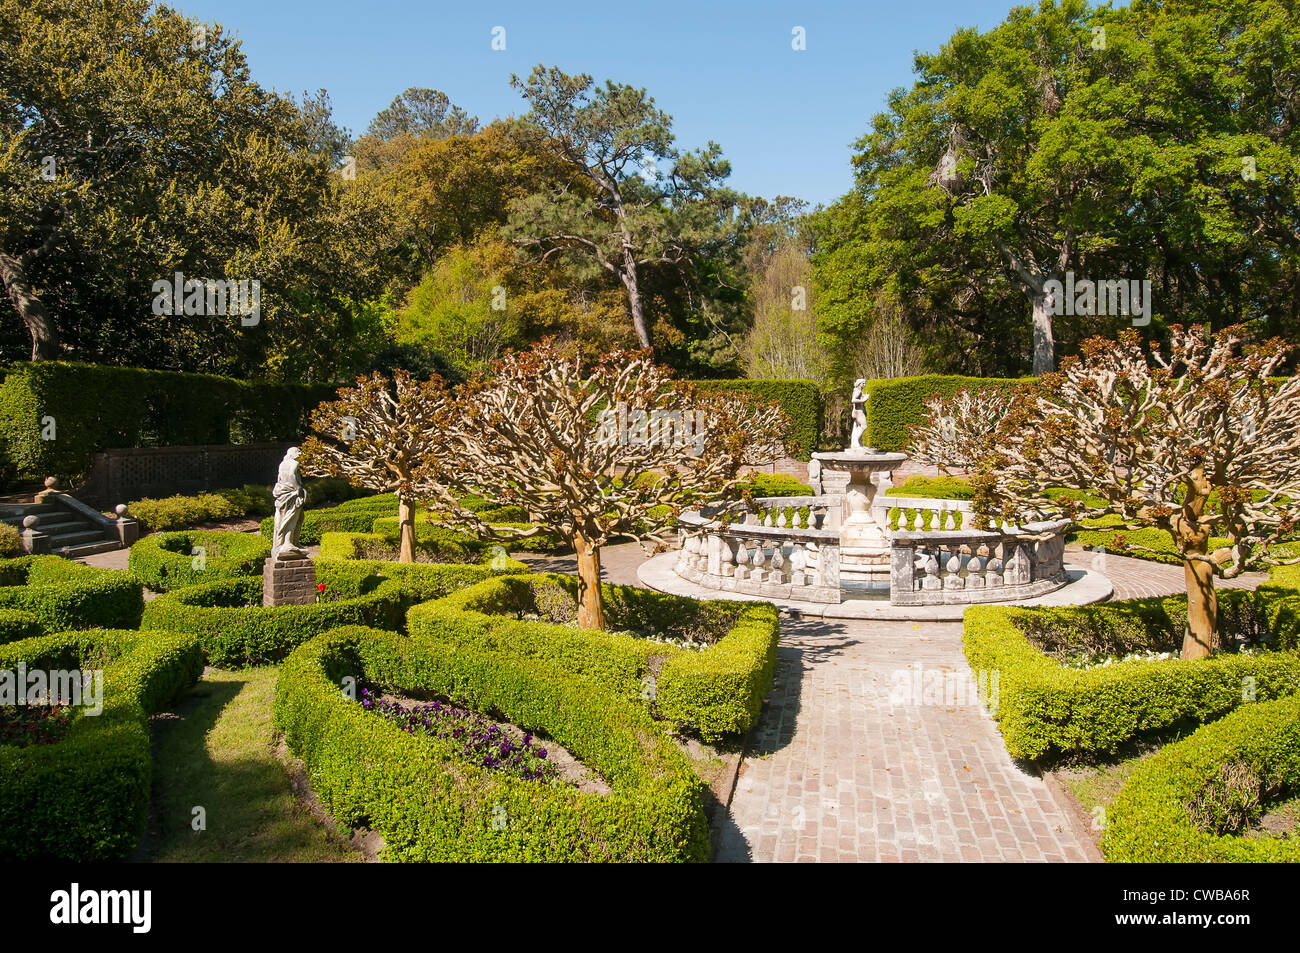 Elizabethan Gardens Sunken Gardens with ancient Italian Renaissance statue on Roanoke Island, Manteo, North Carolina Stock Photo